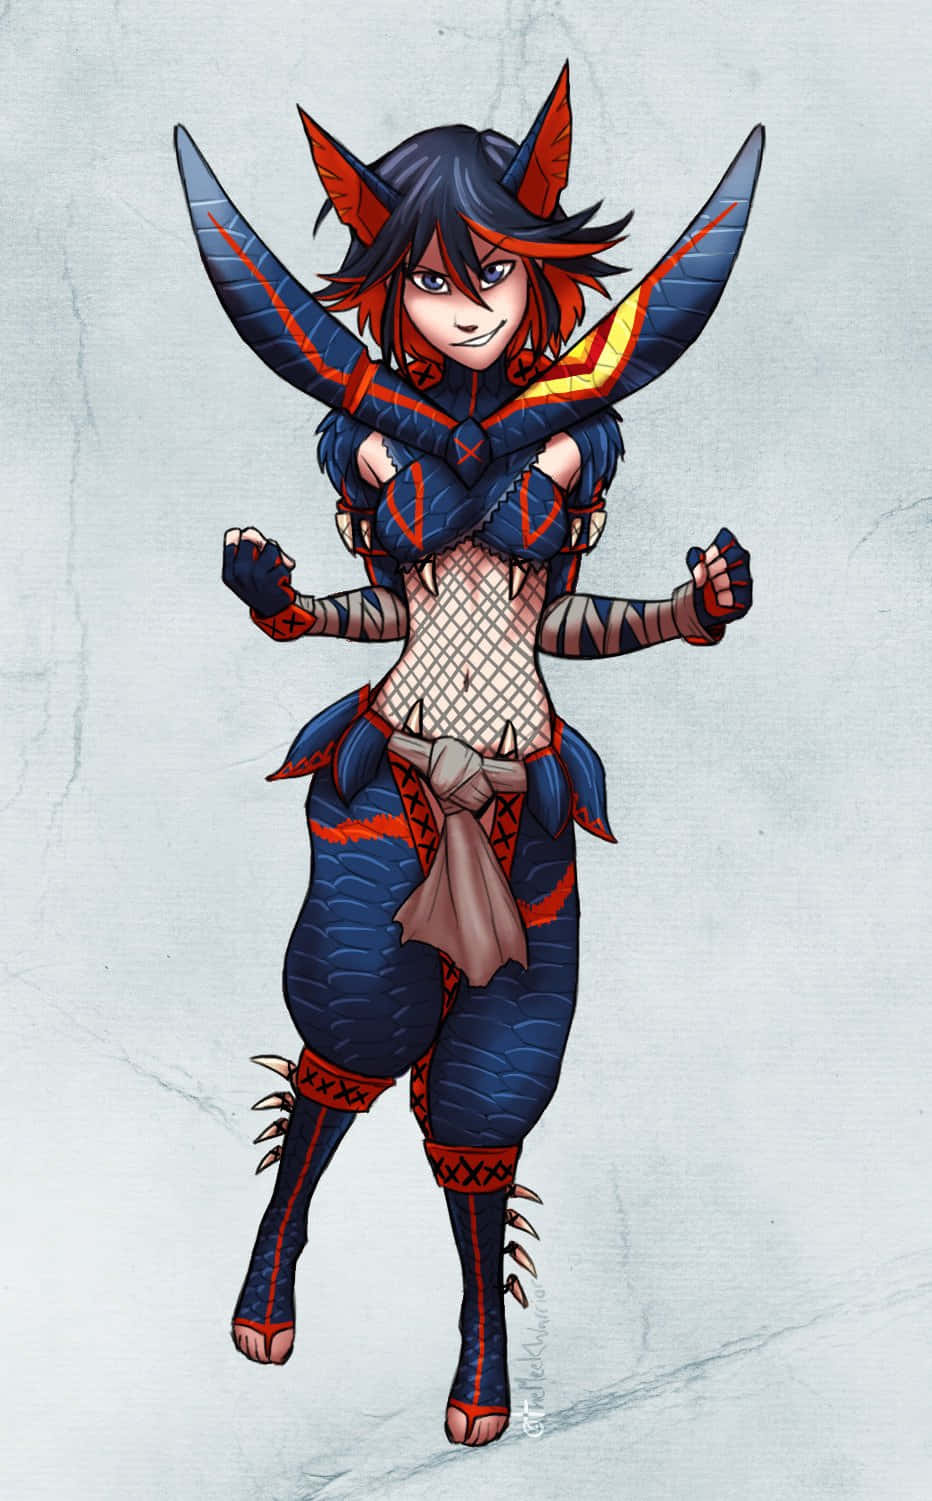 Kill La Kill's protagonist Ryuko Matoi wearing the powerful Senketsu outfit. Wallpaper